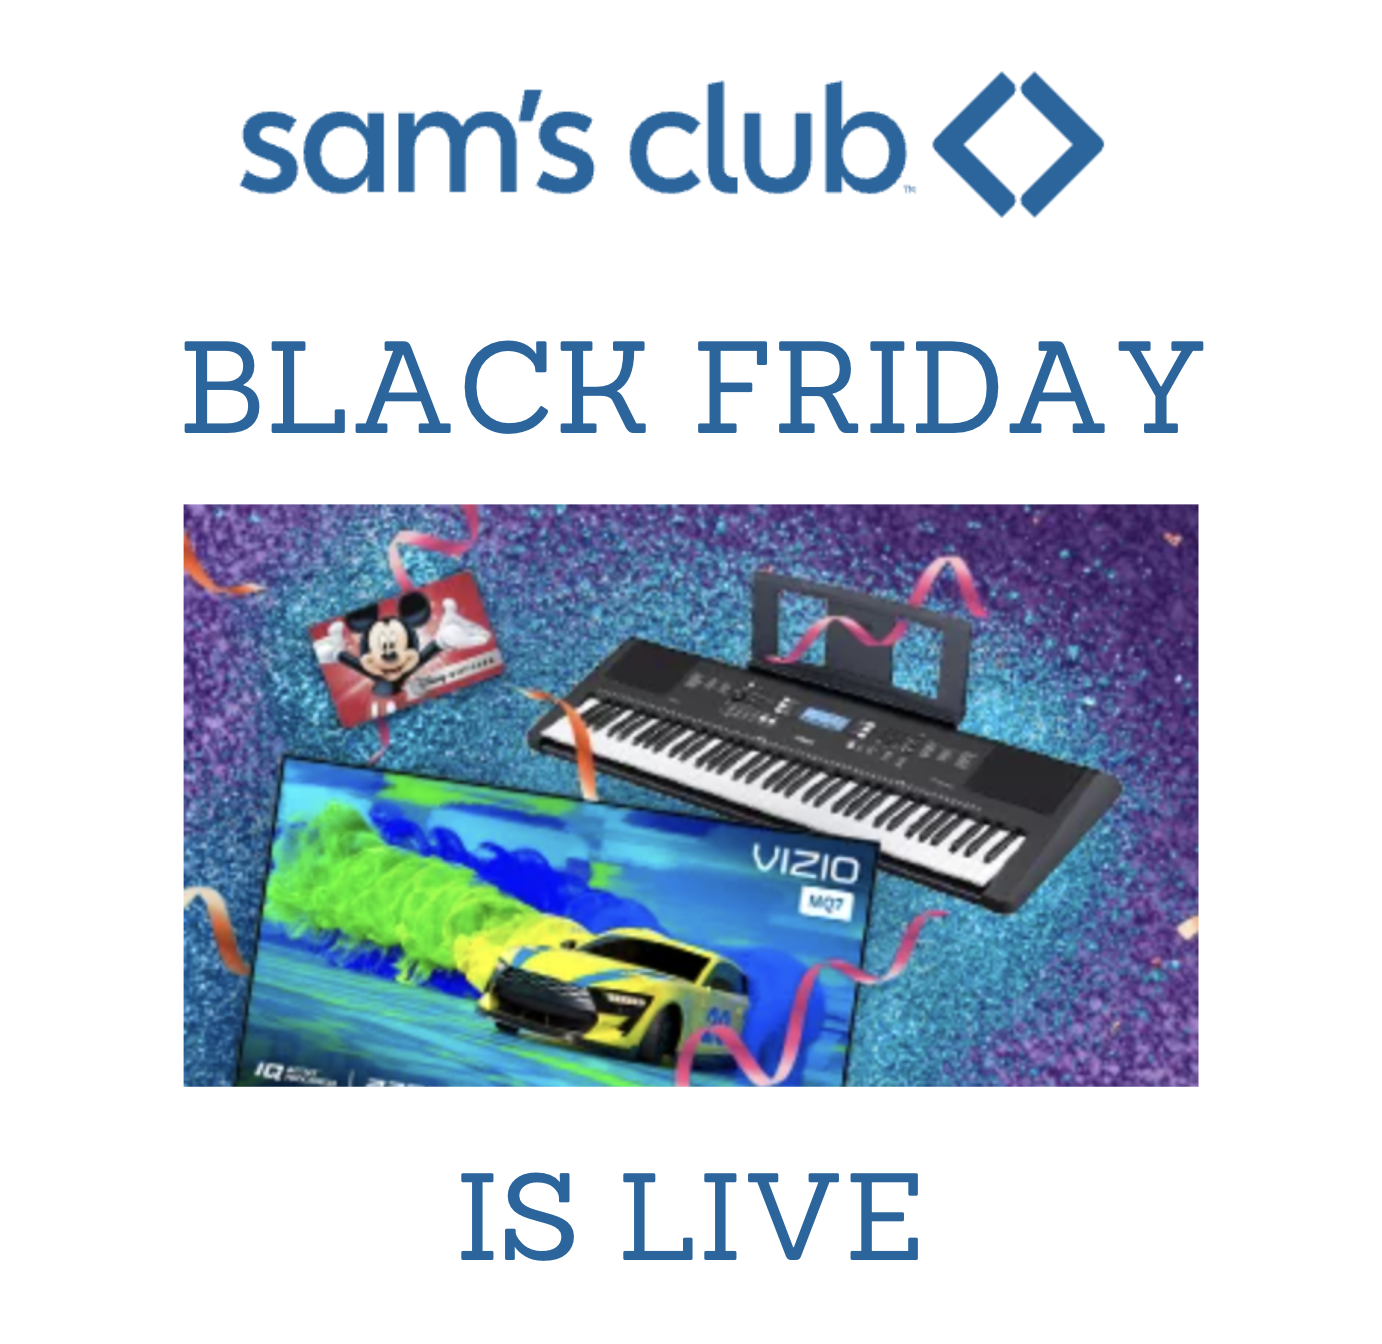 Sams Club Black Friday Is Live Now!